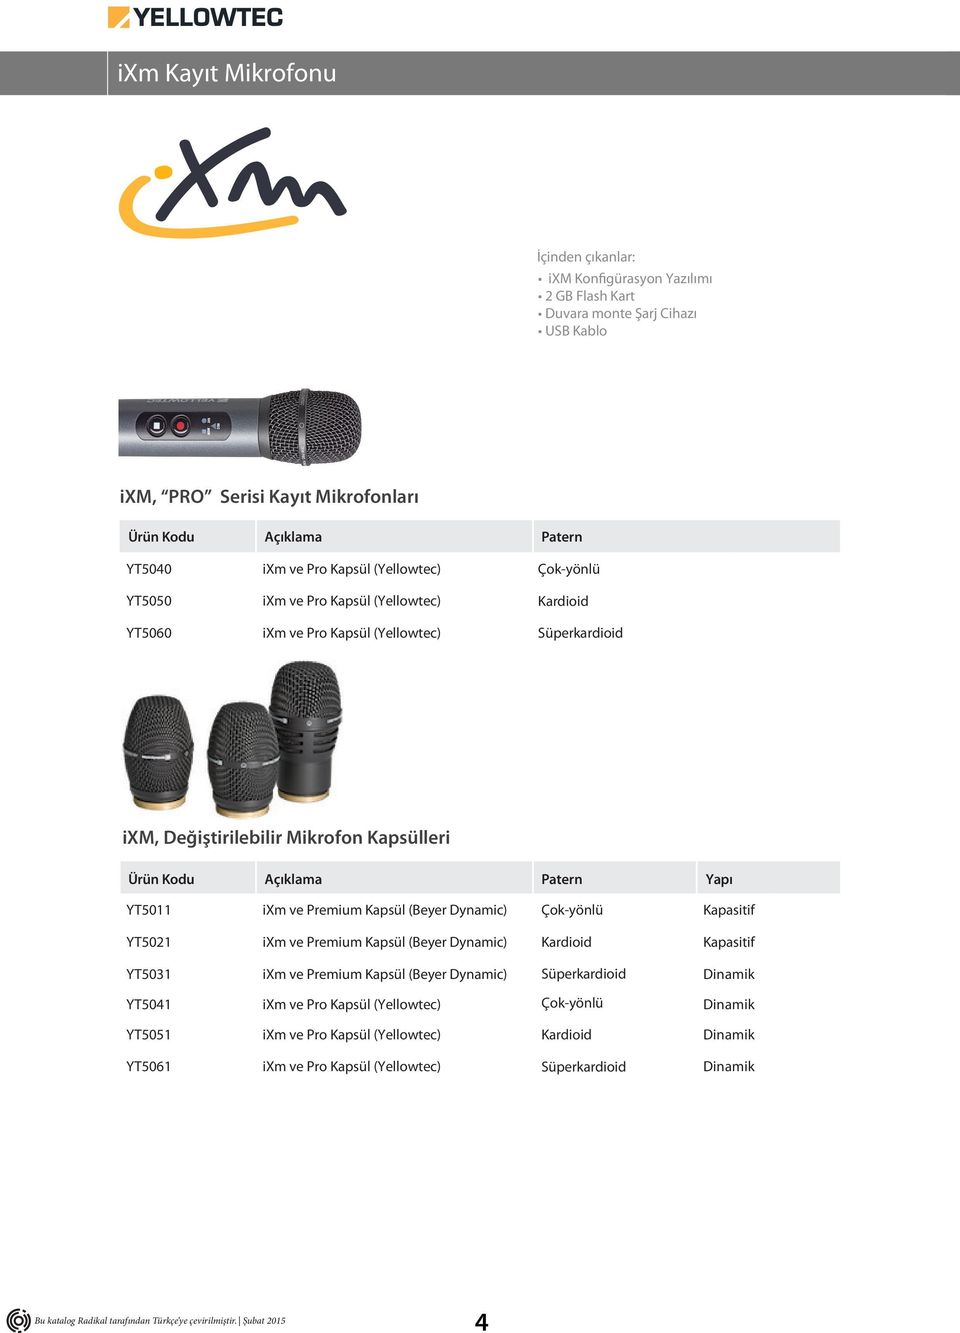 YT5011 ixm ve Premium Kapsül (Beyer Dynamic) Çok-yönlü Kapasitif YT5021 ixm ve Premium Kapsül (Beyer Dynamic) Kardioid Kapasitif YT5031 ixm ve Premium Kapsül (Beyer Dynamic)